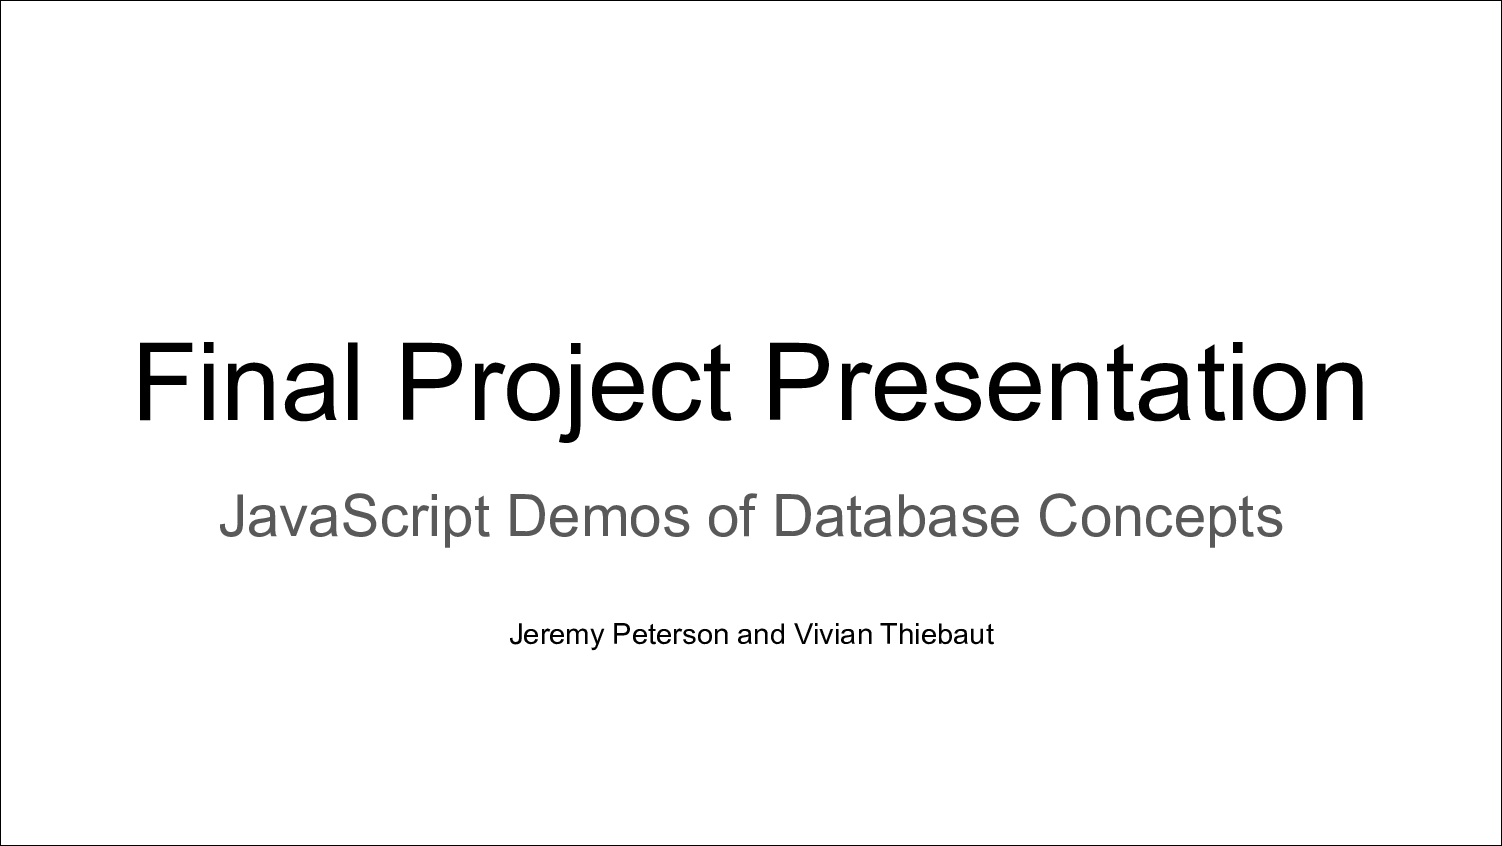 [PRESENTATION] Learning Database Management Protocols via JavaScript Demos